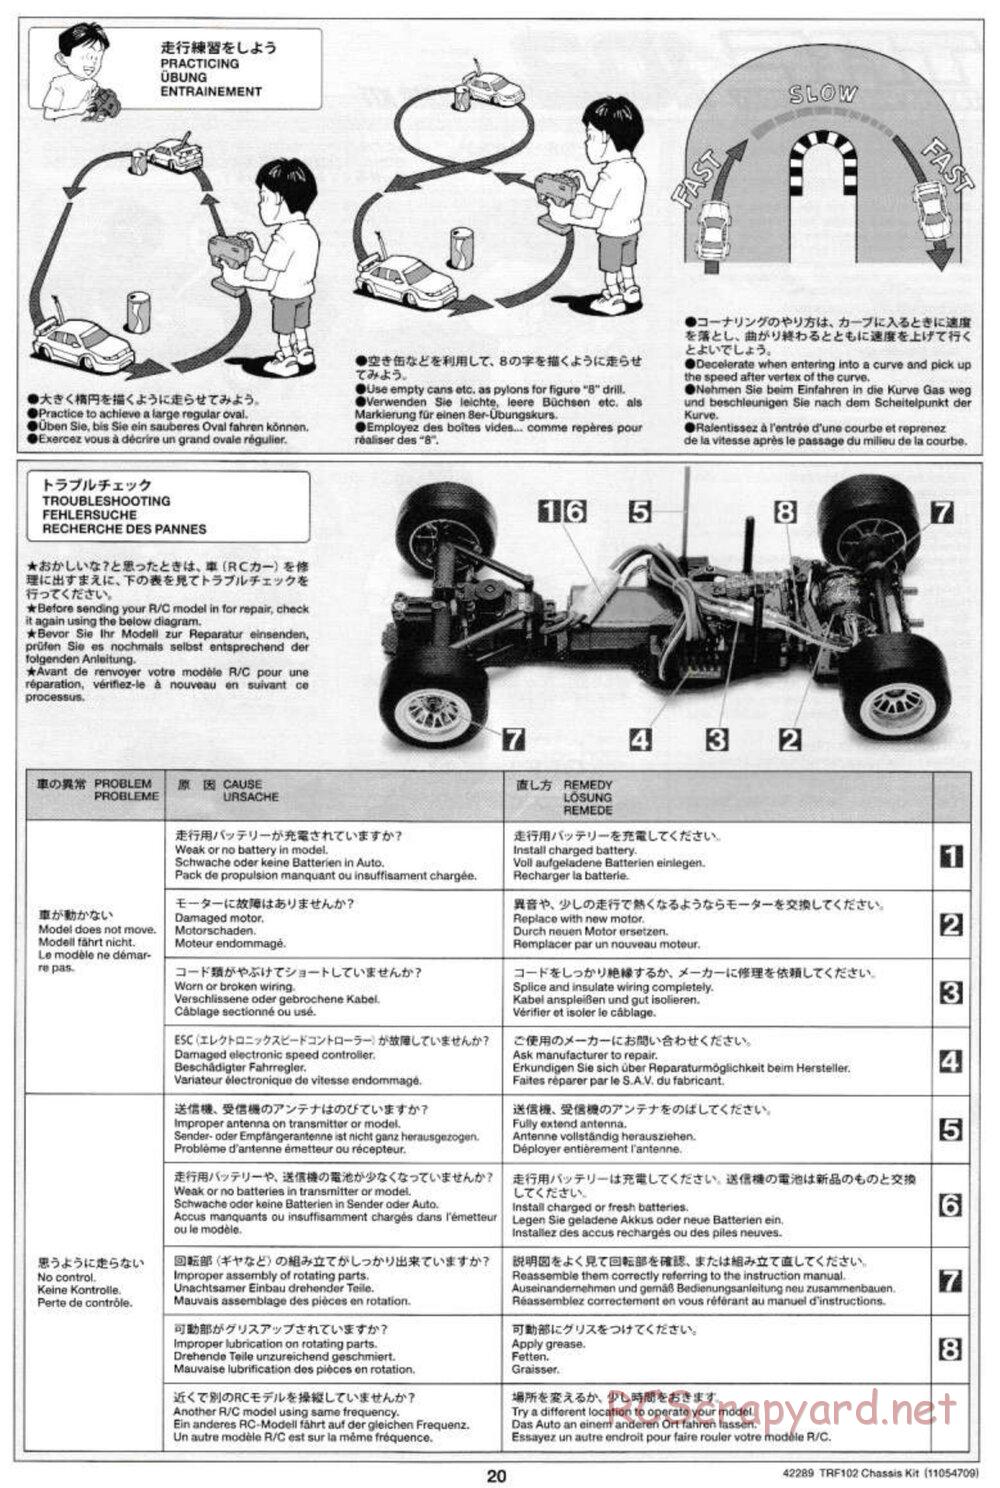 Tamiya - TRF102 Chassis - Manual - Page 20